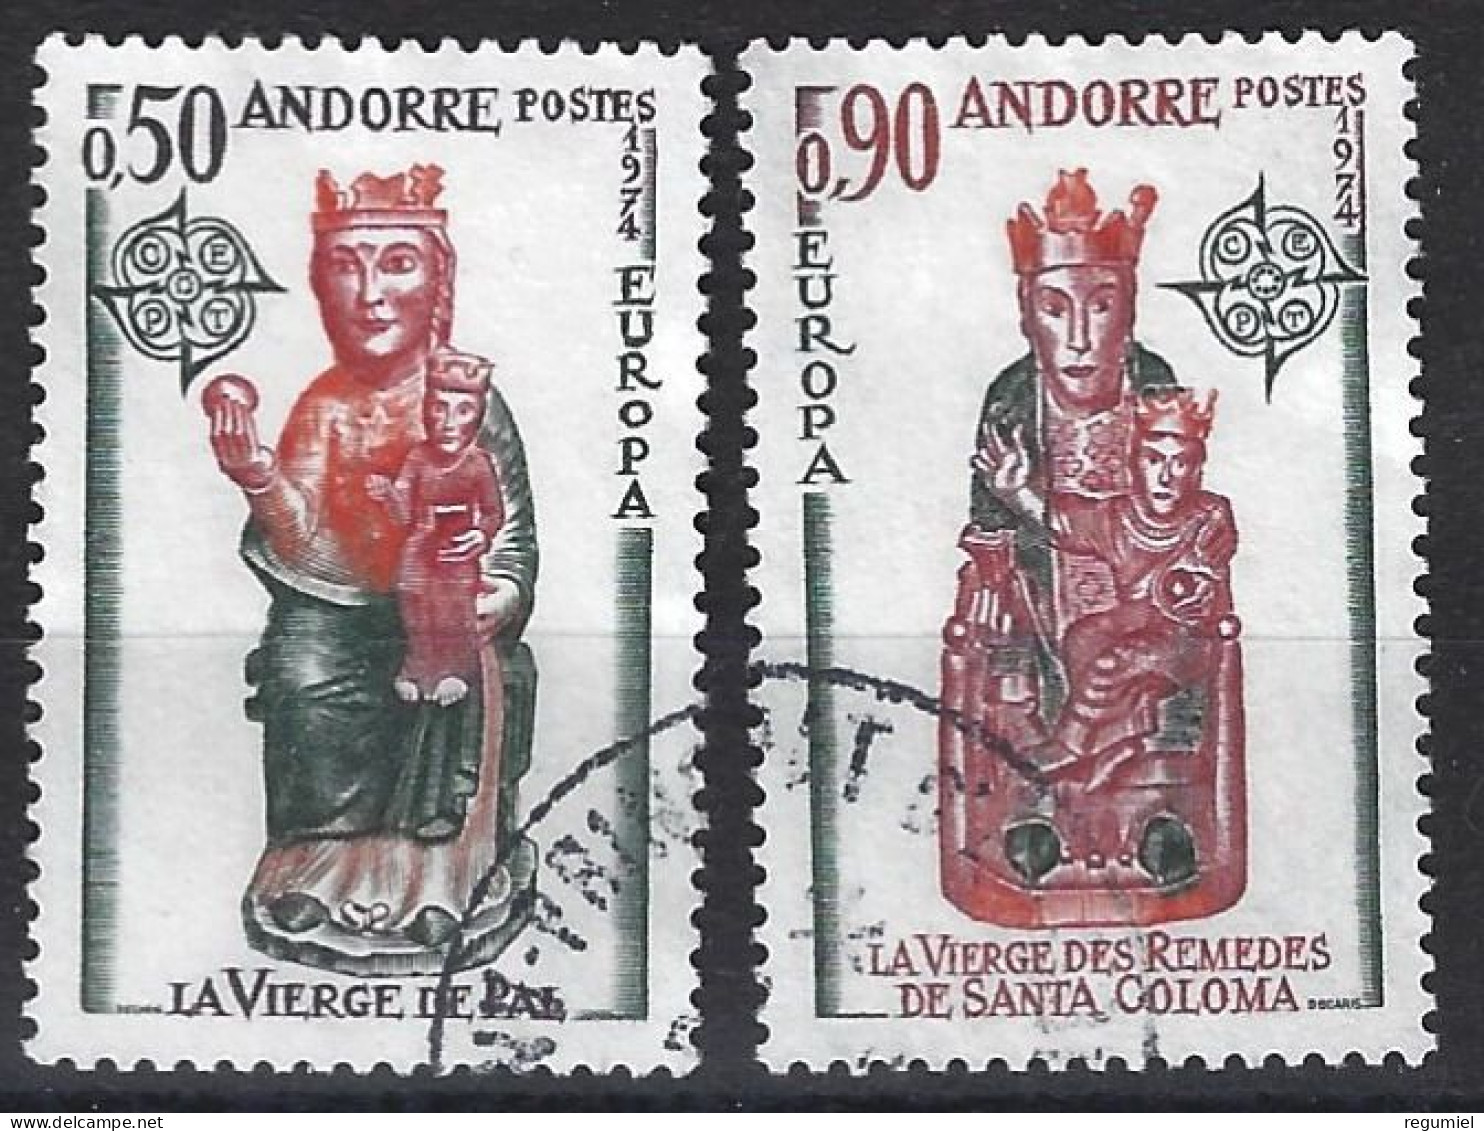 Andorra Francesa U 237/238 (o) Usado. 1974 - Used Stamps